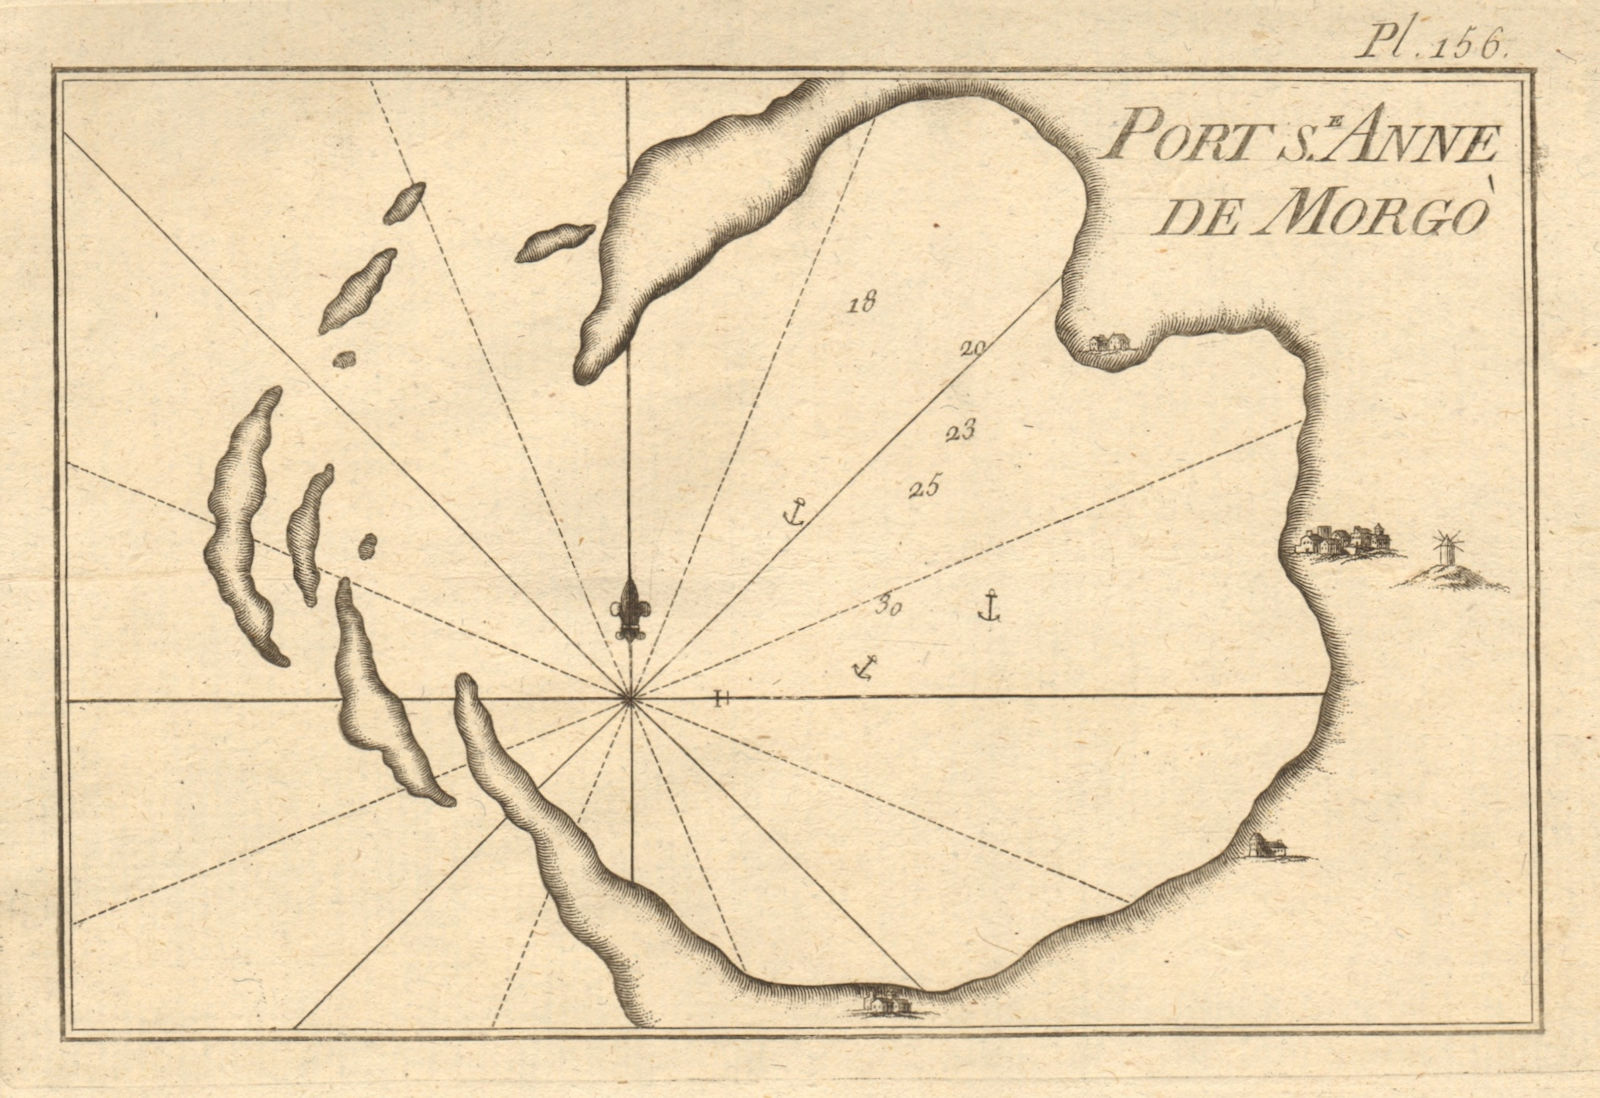 St. Anne de Morgo. Katapola, Amorgos, Cyclades. Agia Anna. Greece. ROUX 1804 map